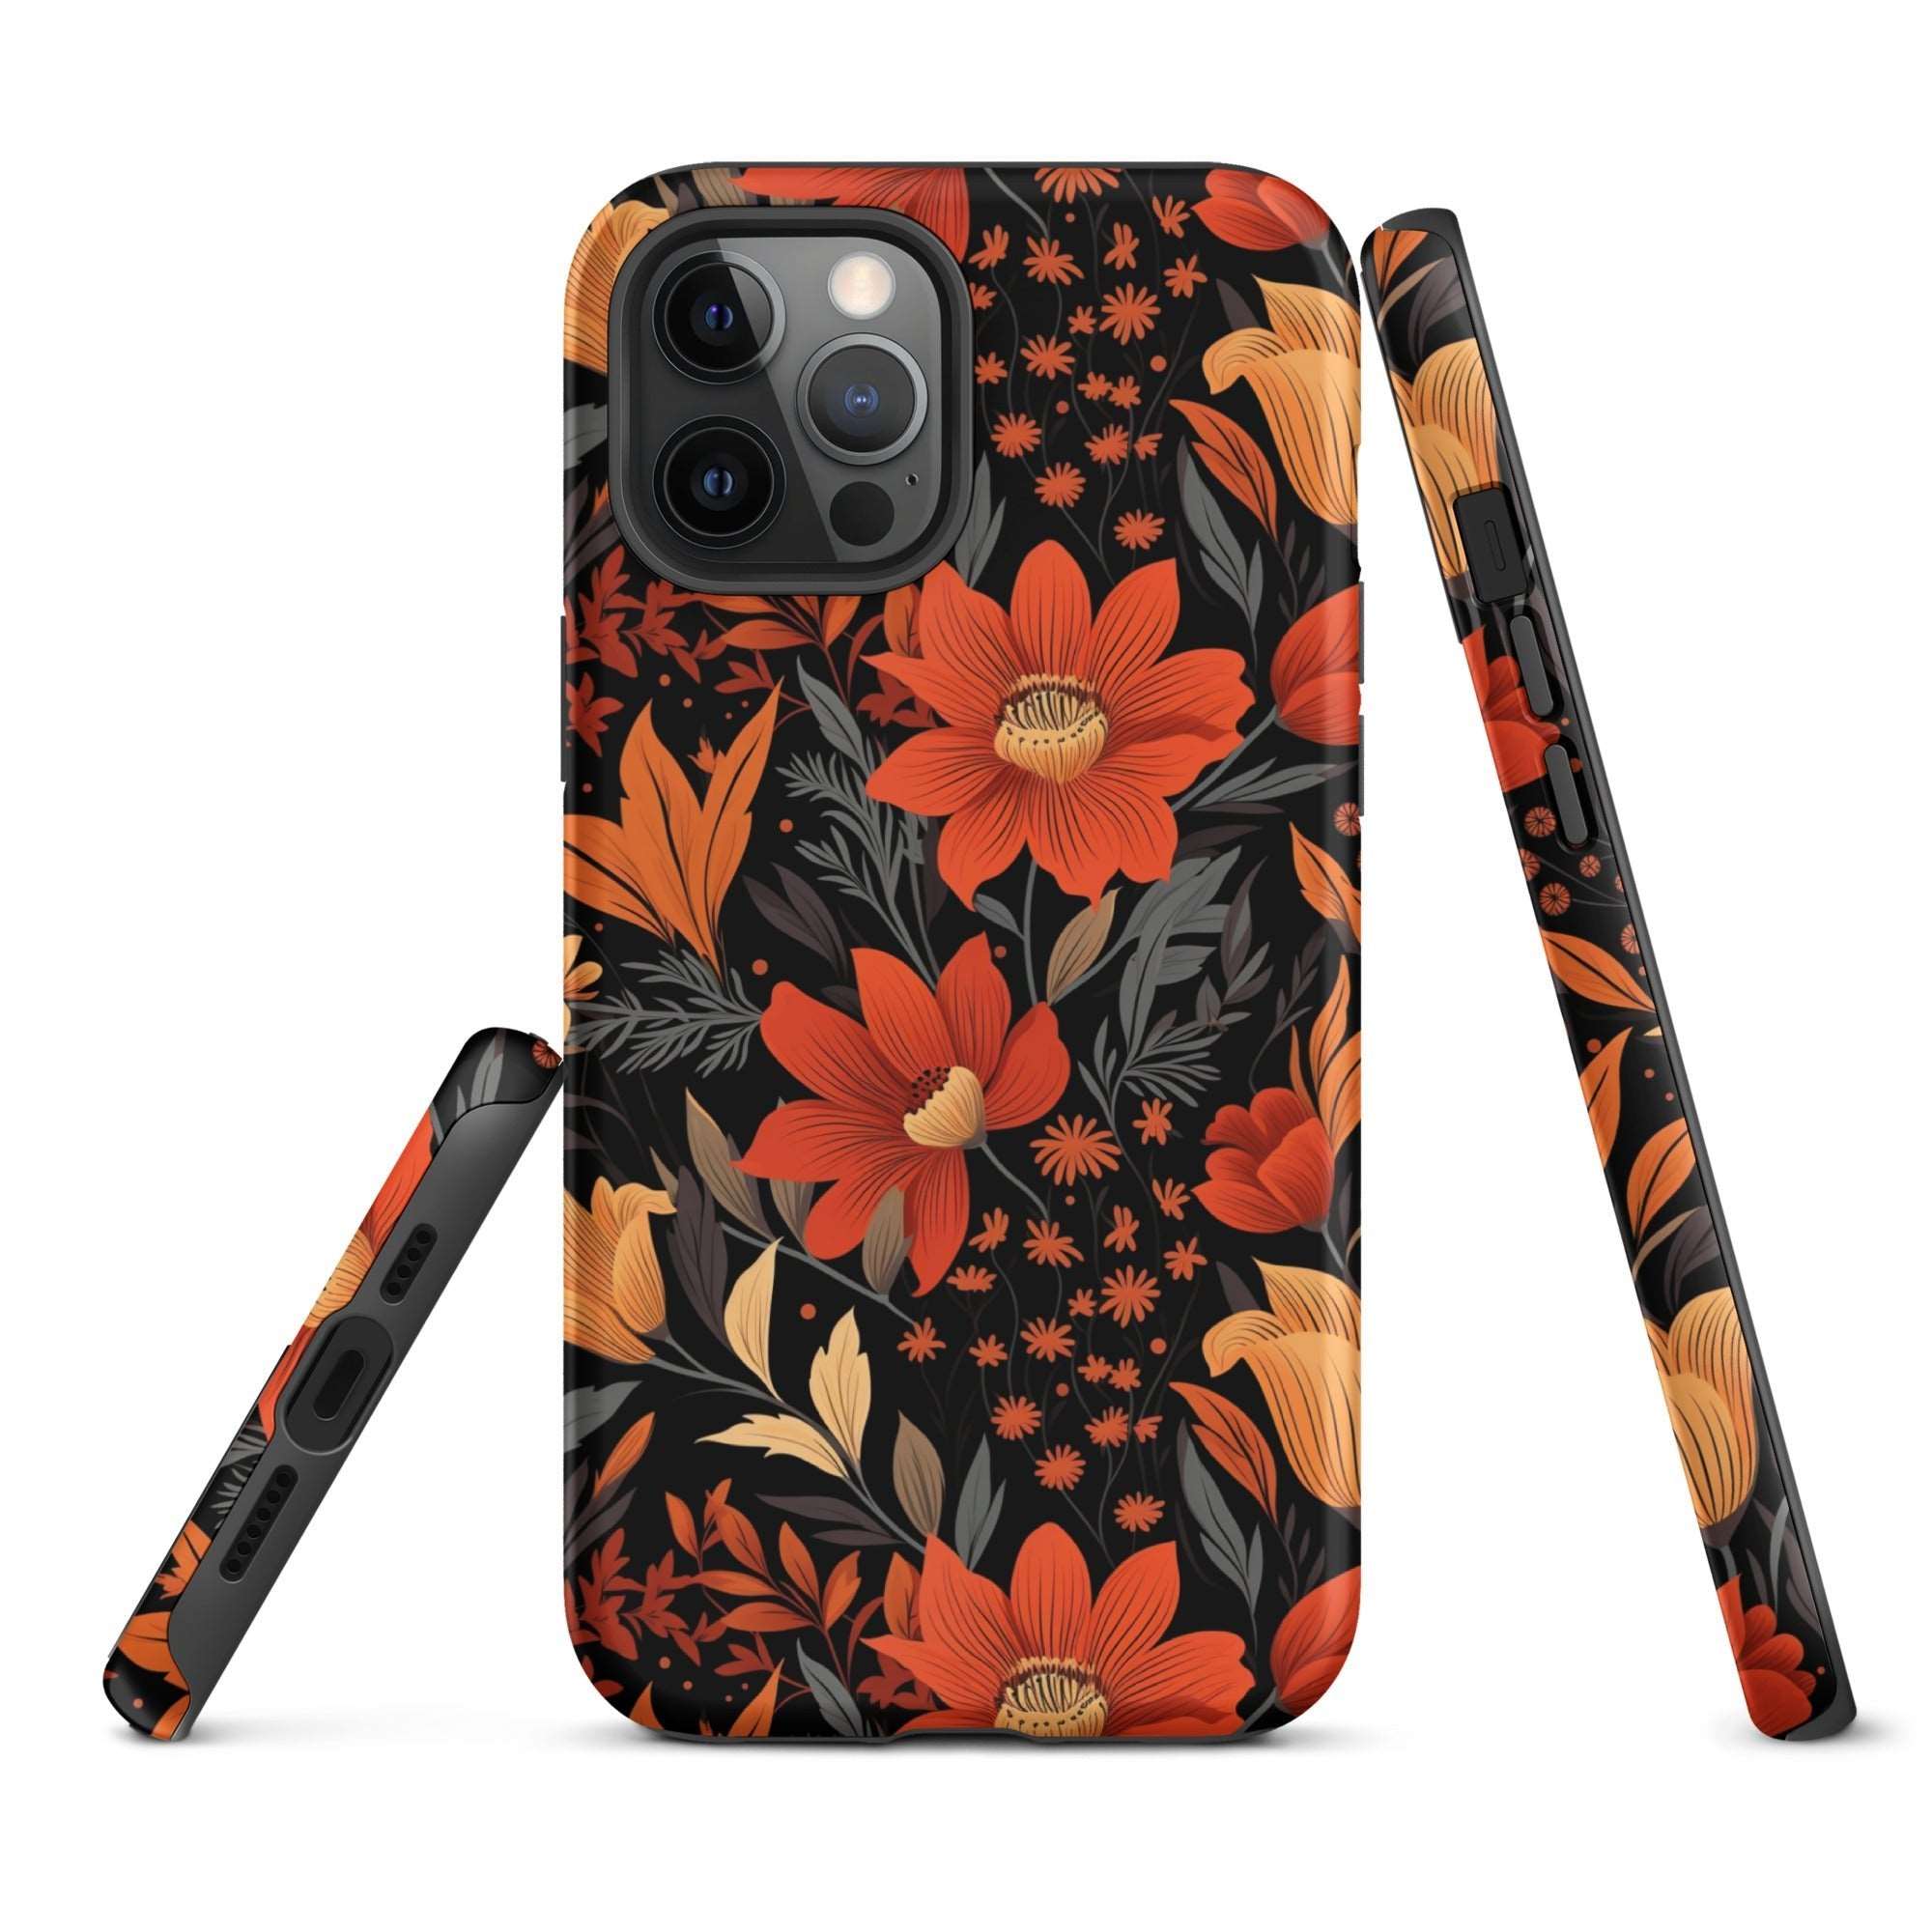 Autumn Blossom Noir - A Dark Floral Canvas - iPhone Case - Pattern Symphony